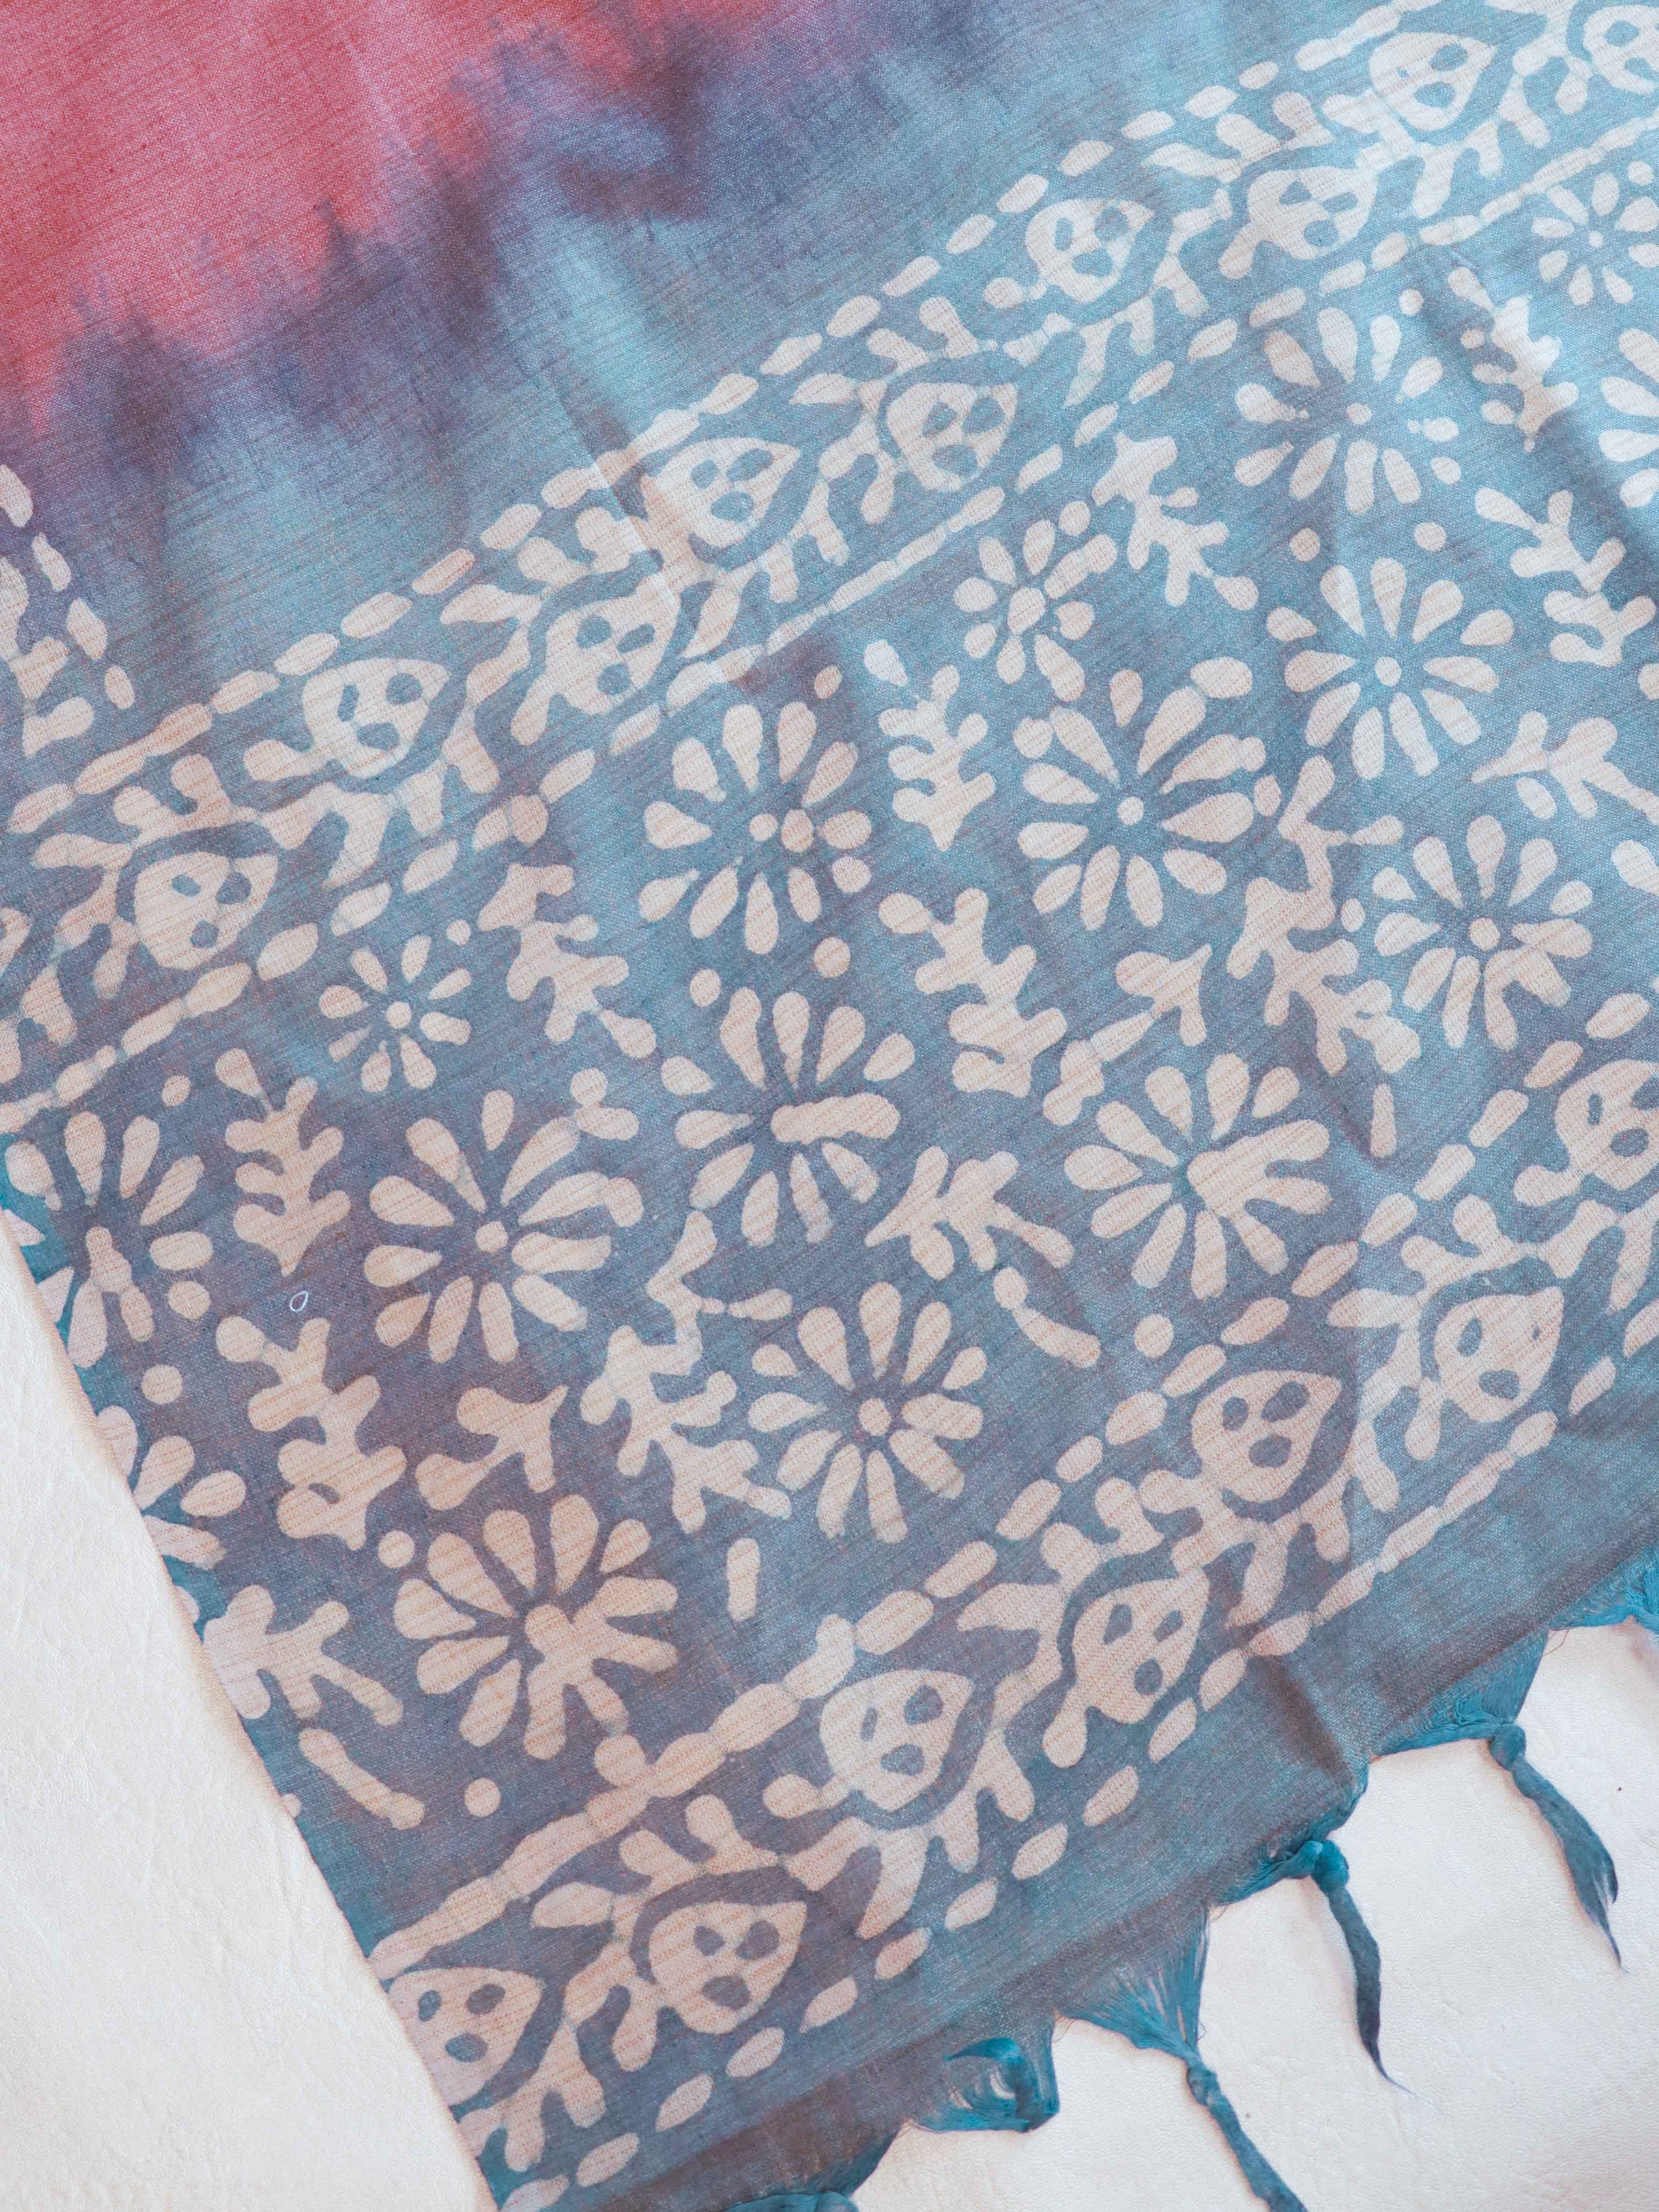 Handloom Khadi Cotton Hand-Dyed Batik Pattern Salwar Kameez Dupatta Set-Plum & Blue